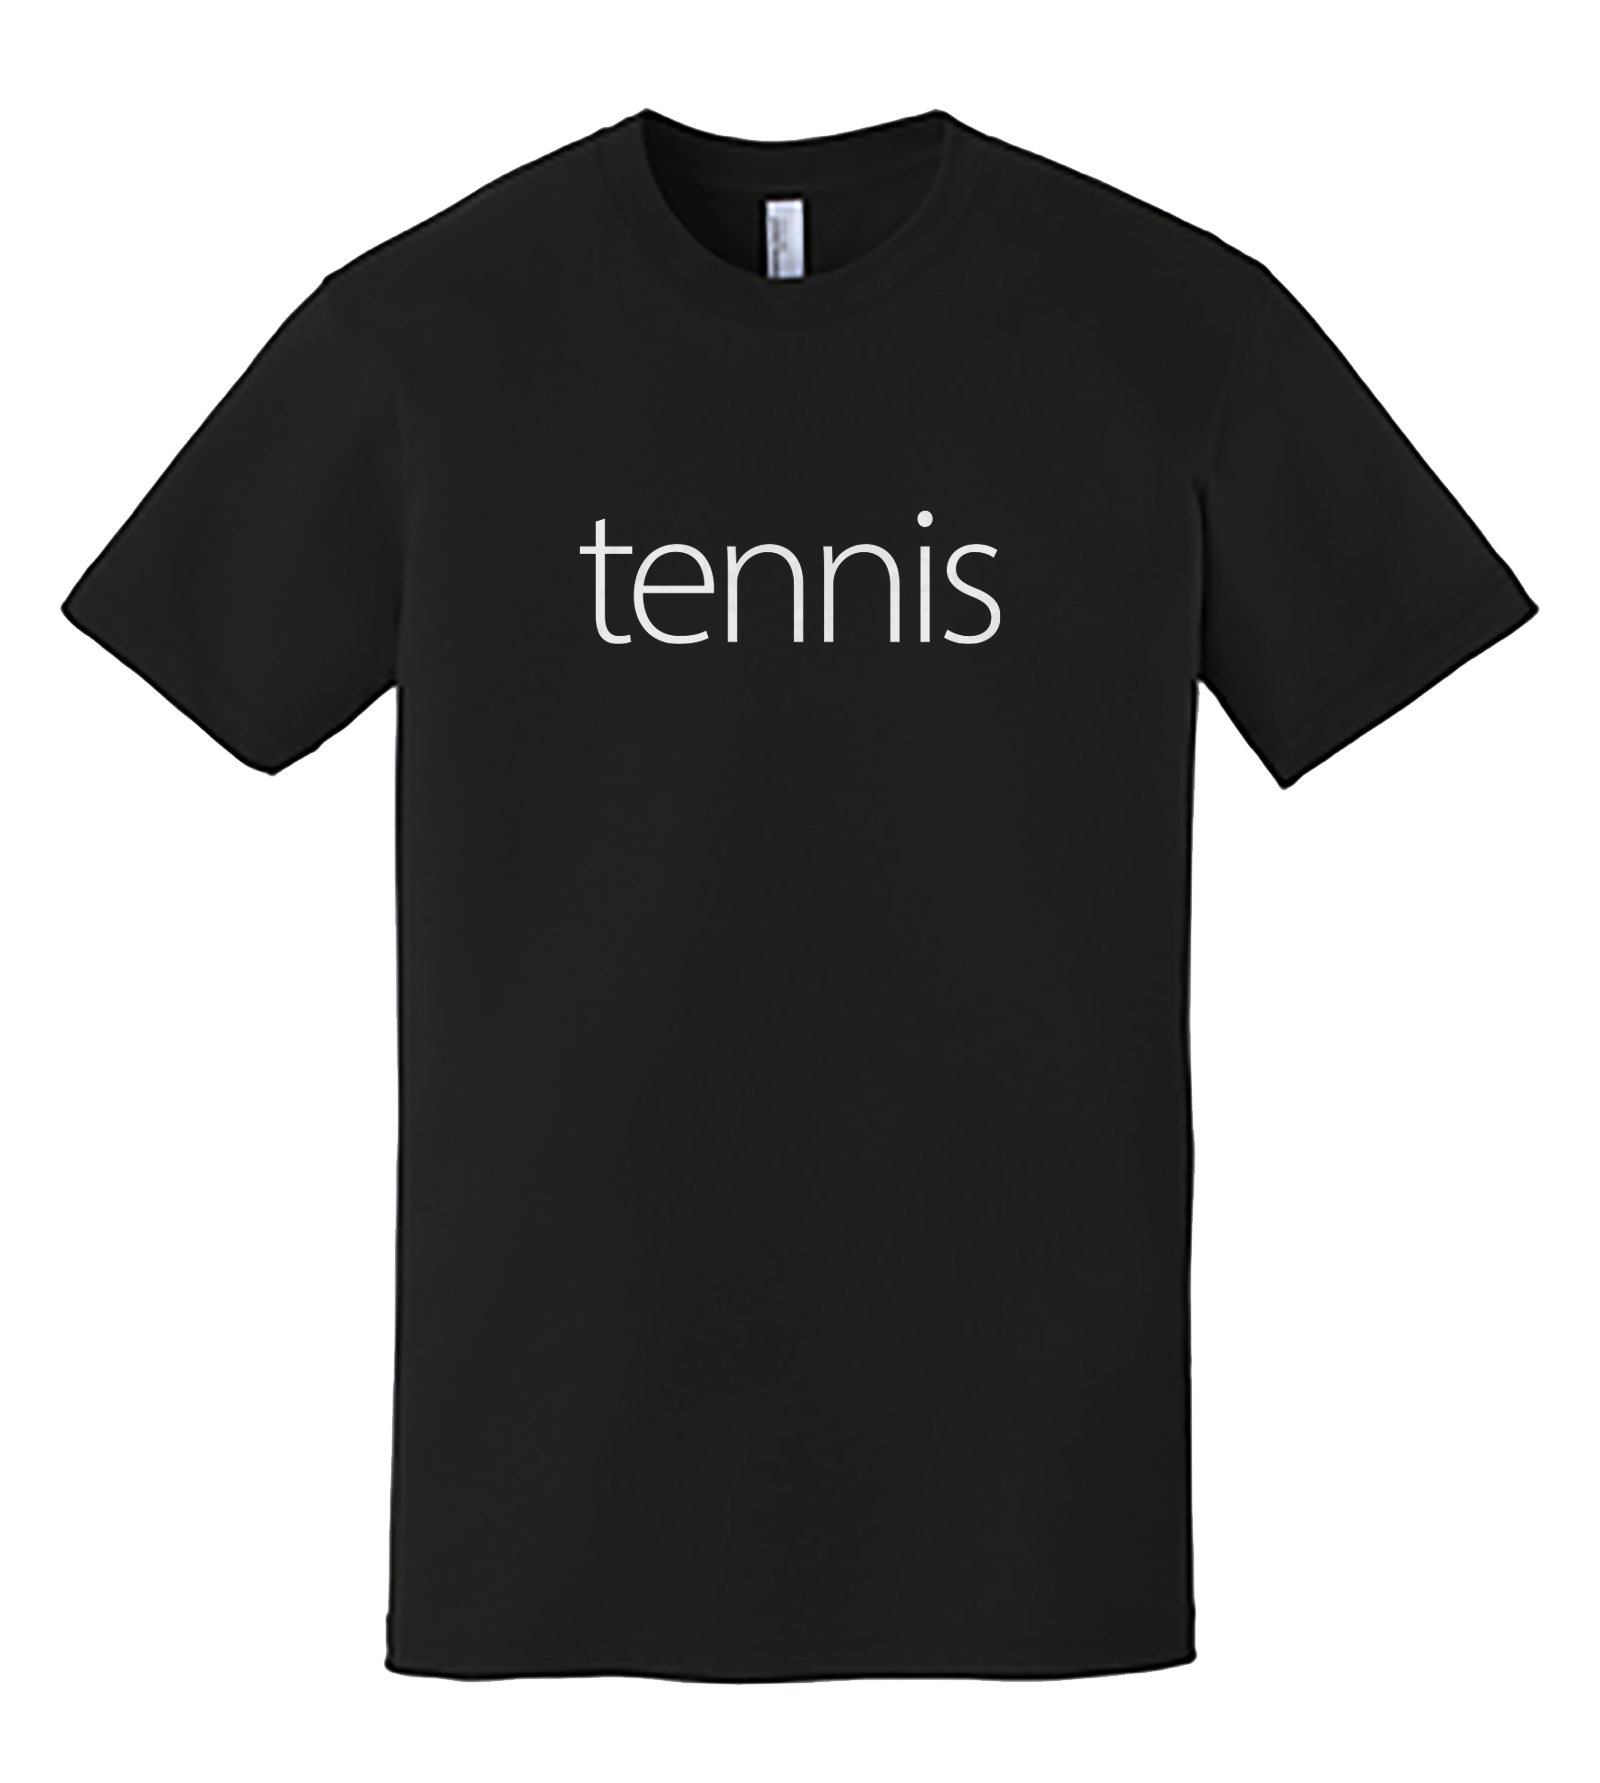 Tennis Apparel